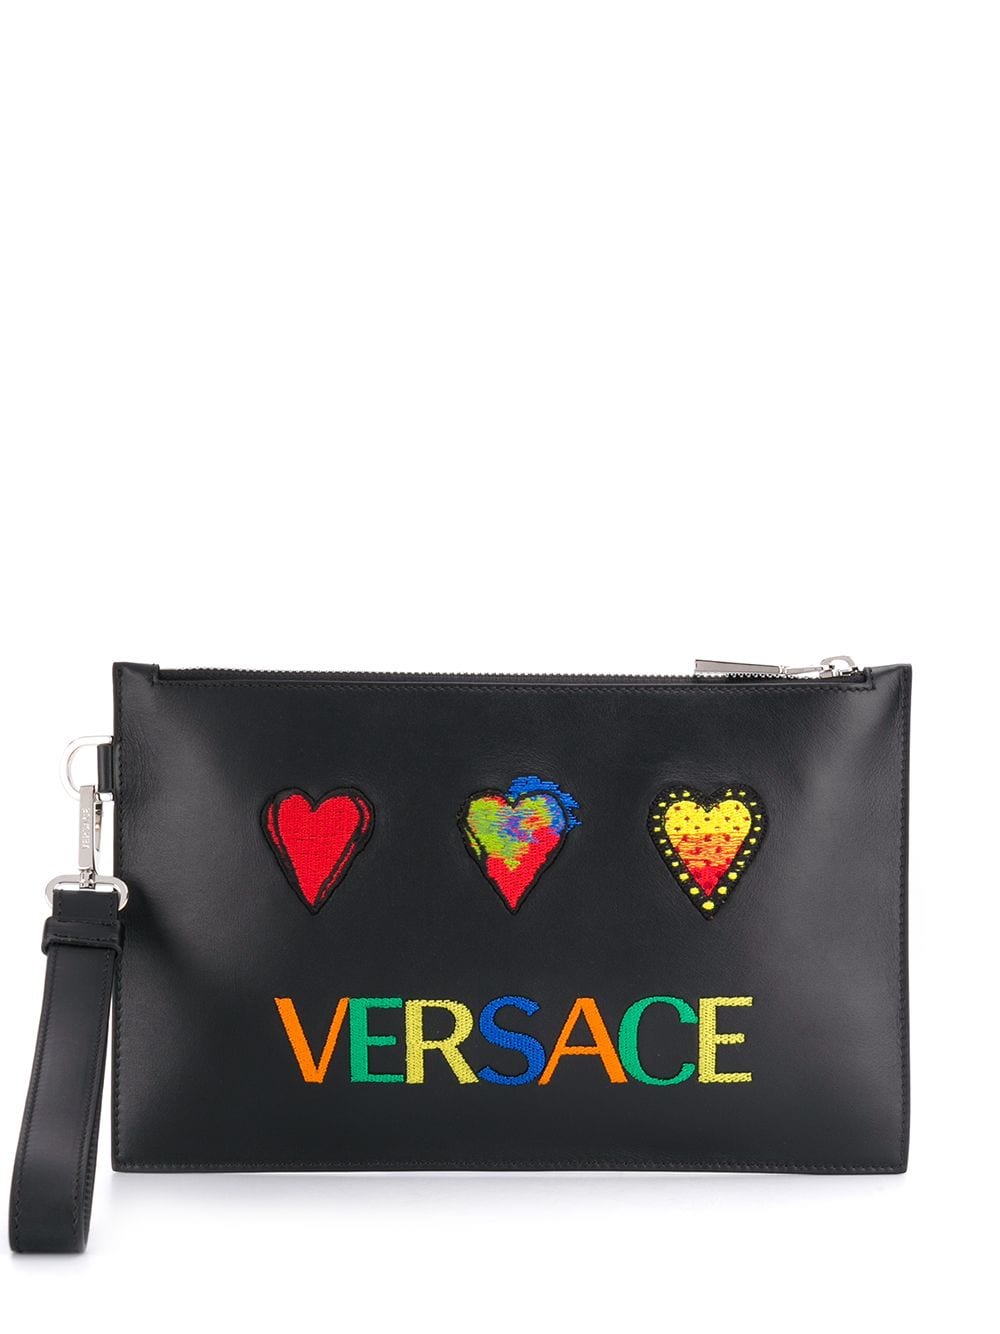 фото Versace клатч I Love Versace